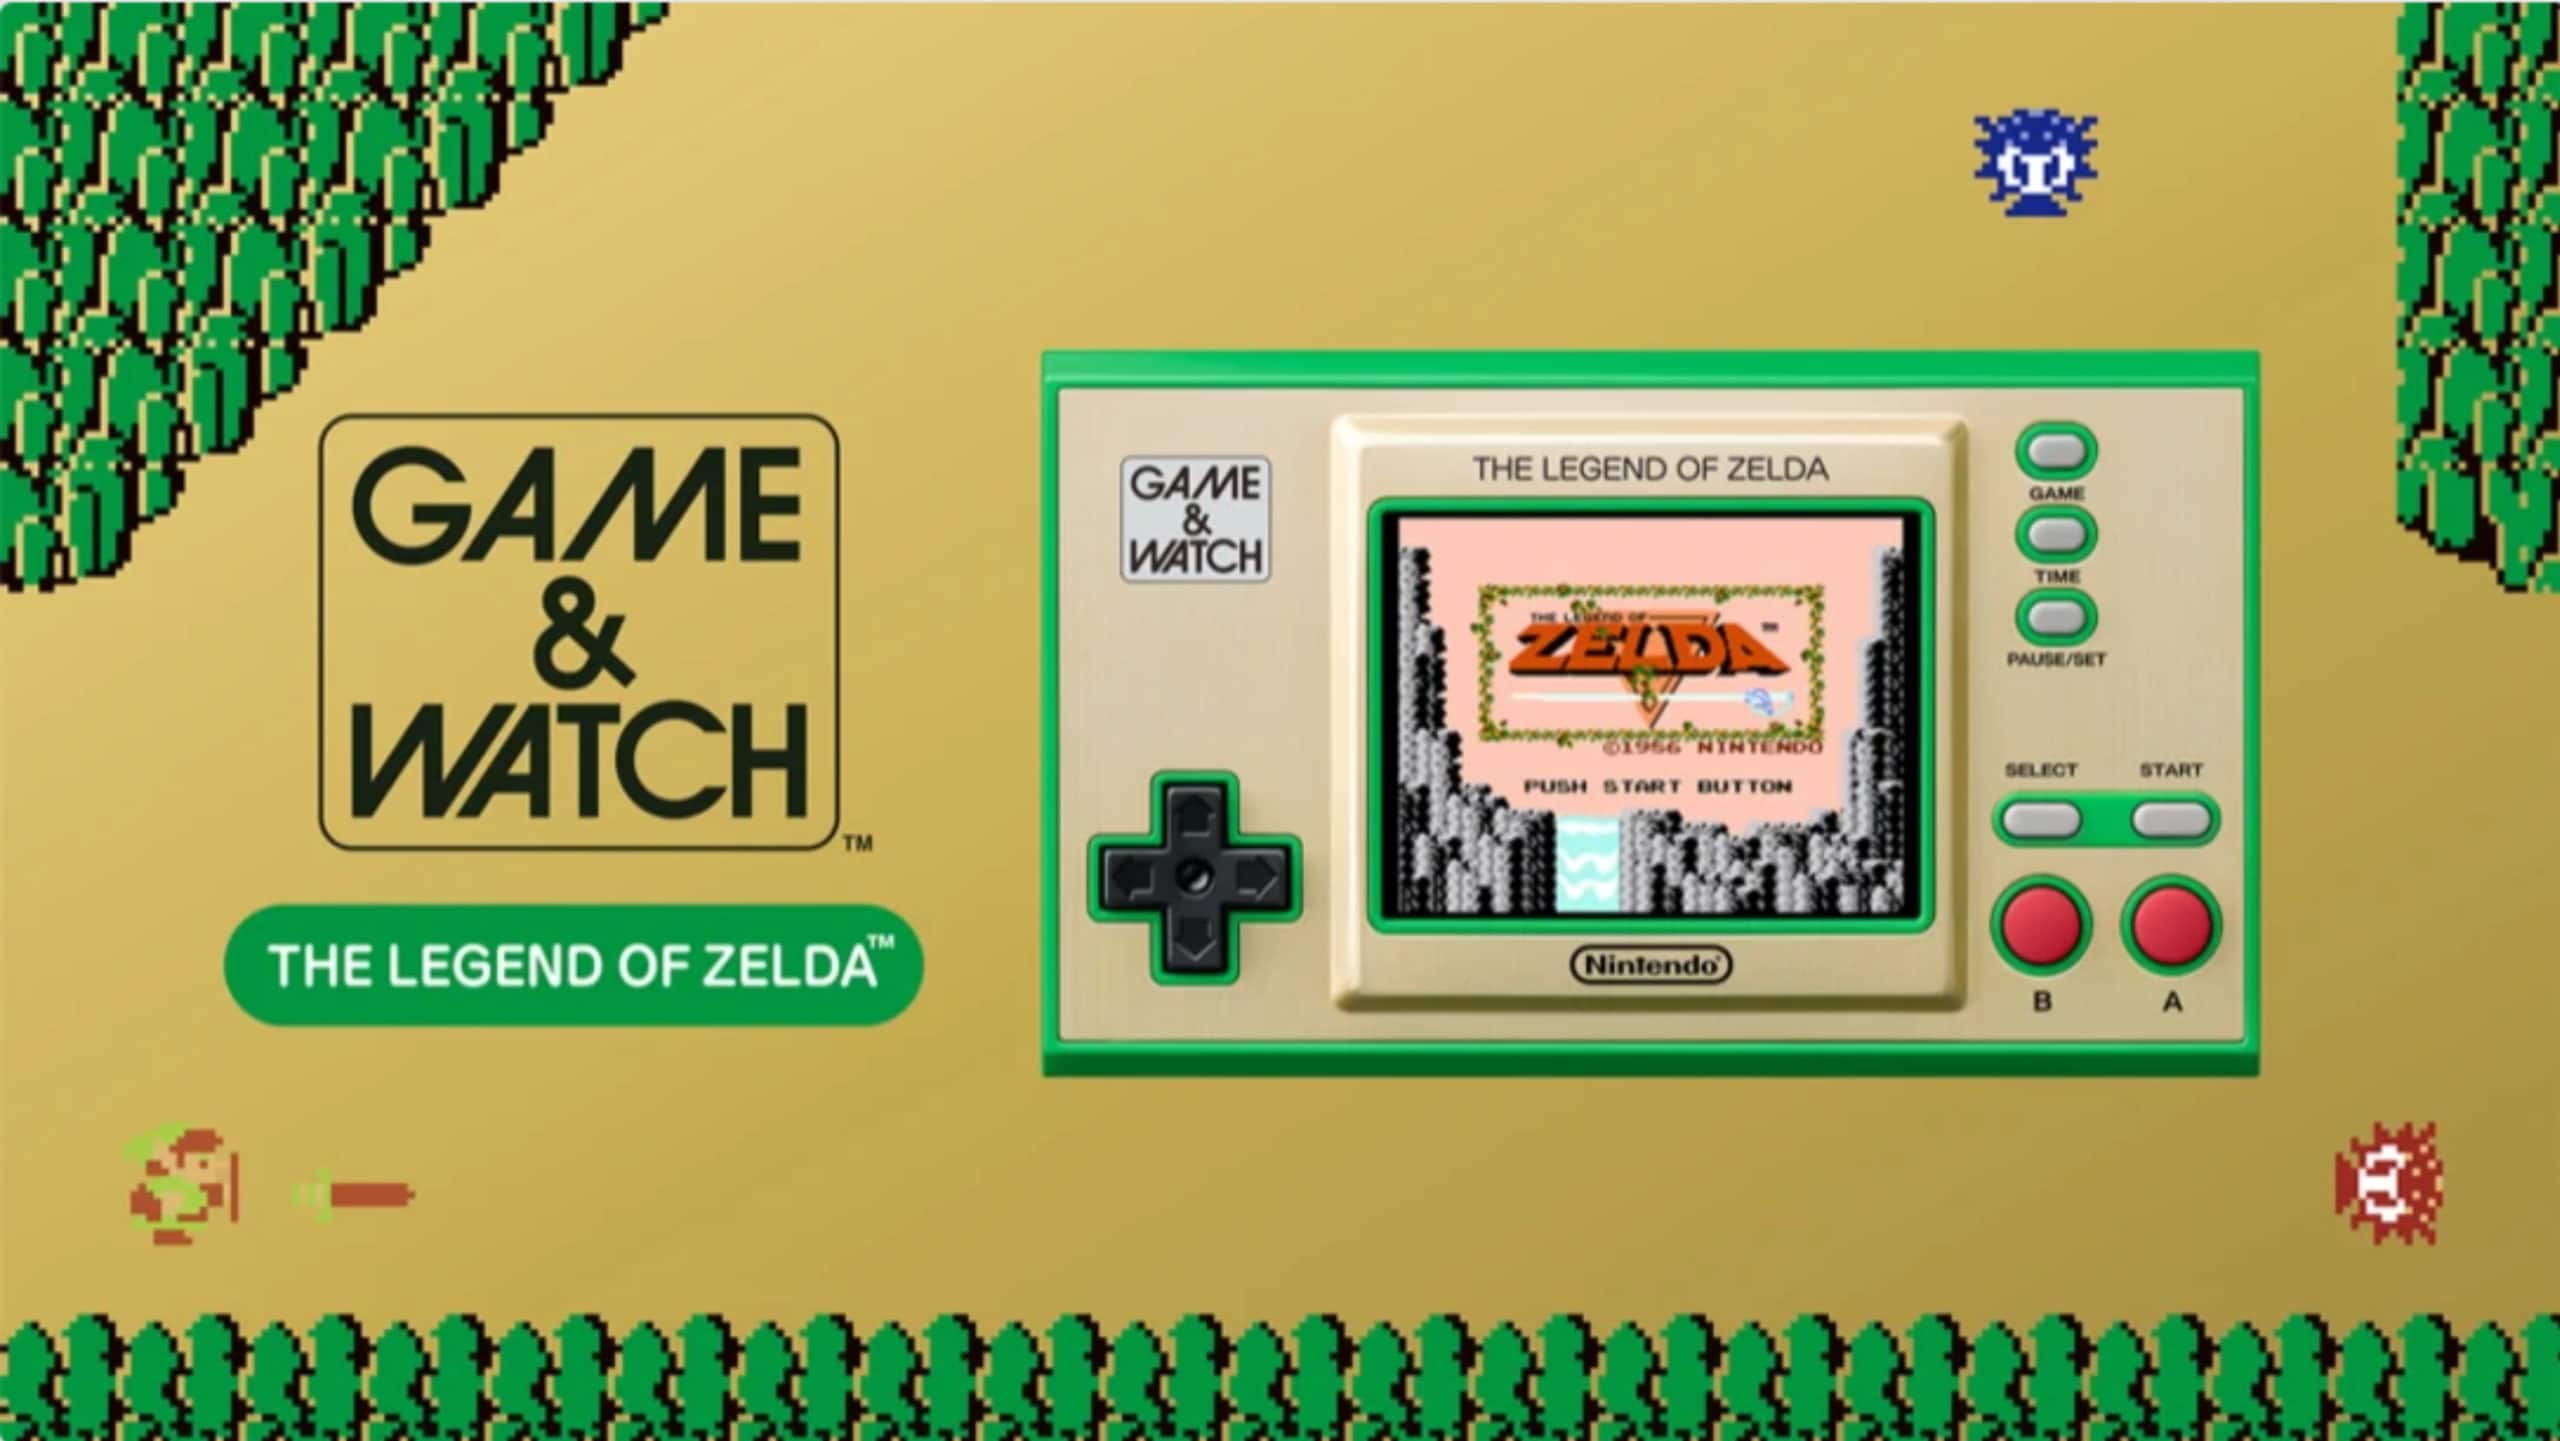 Game & Watch: The Legend of Zelda - ©Nintendo, Quelle: nintendo.com